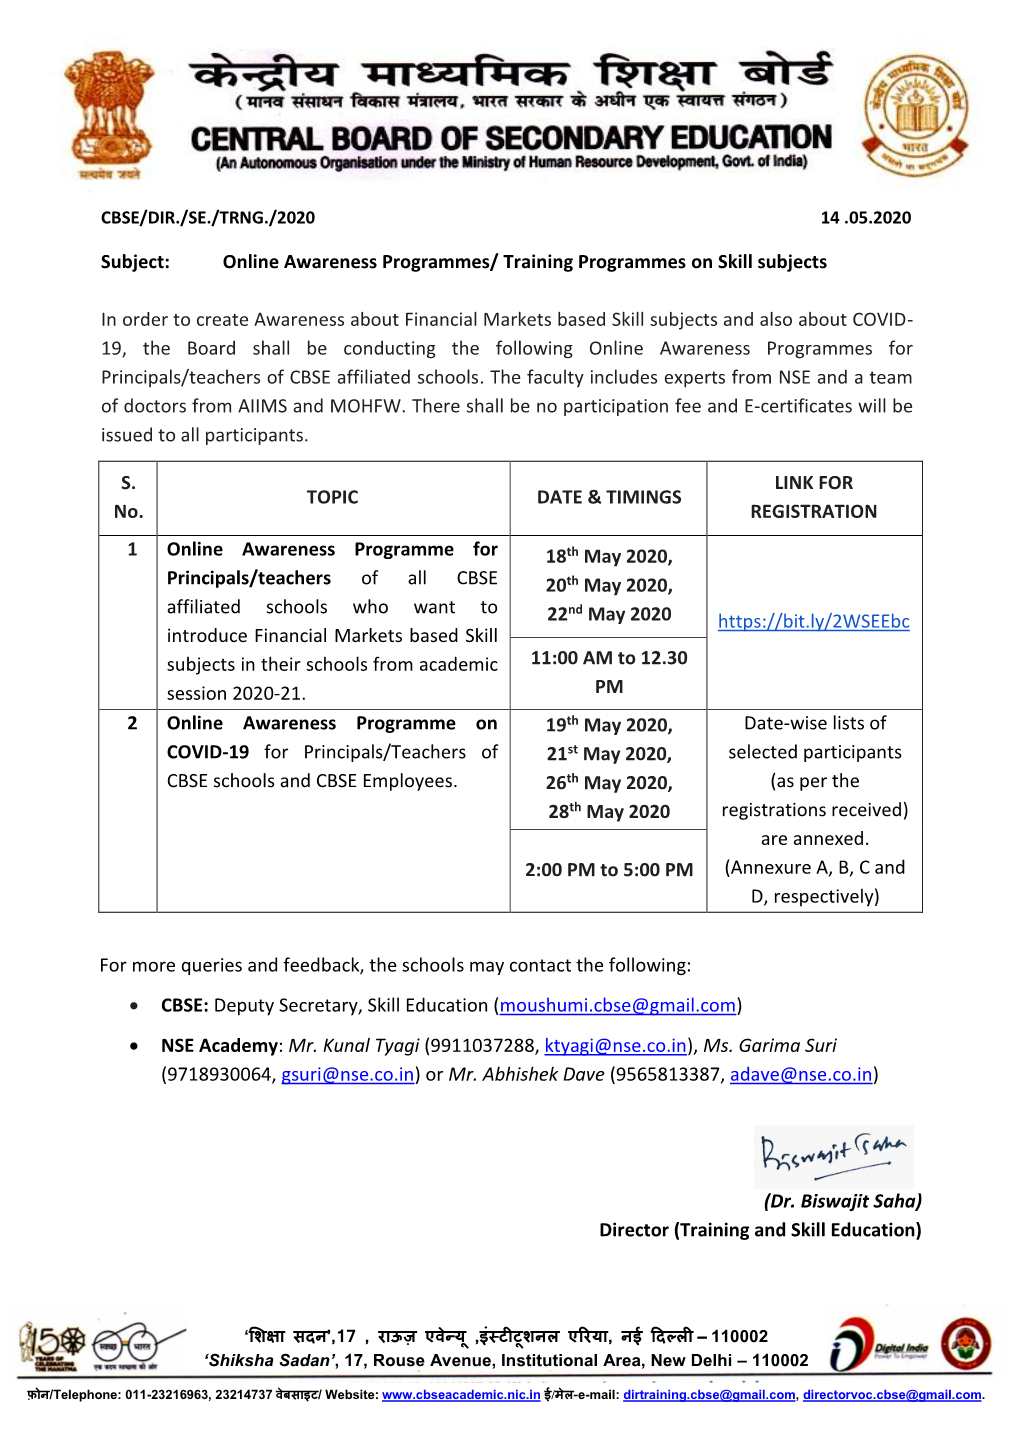 Subject: Online Awareness Programmes/ Training Programmes on Skill Subjects